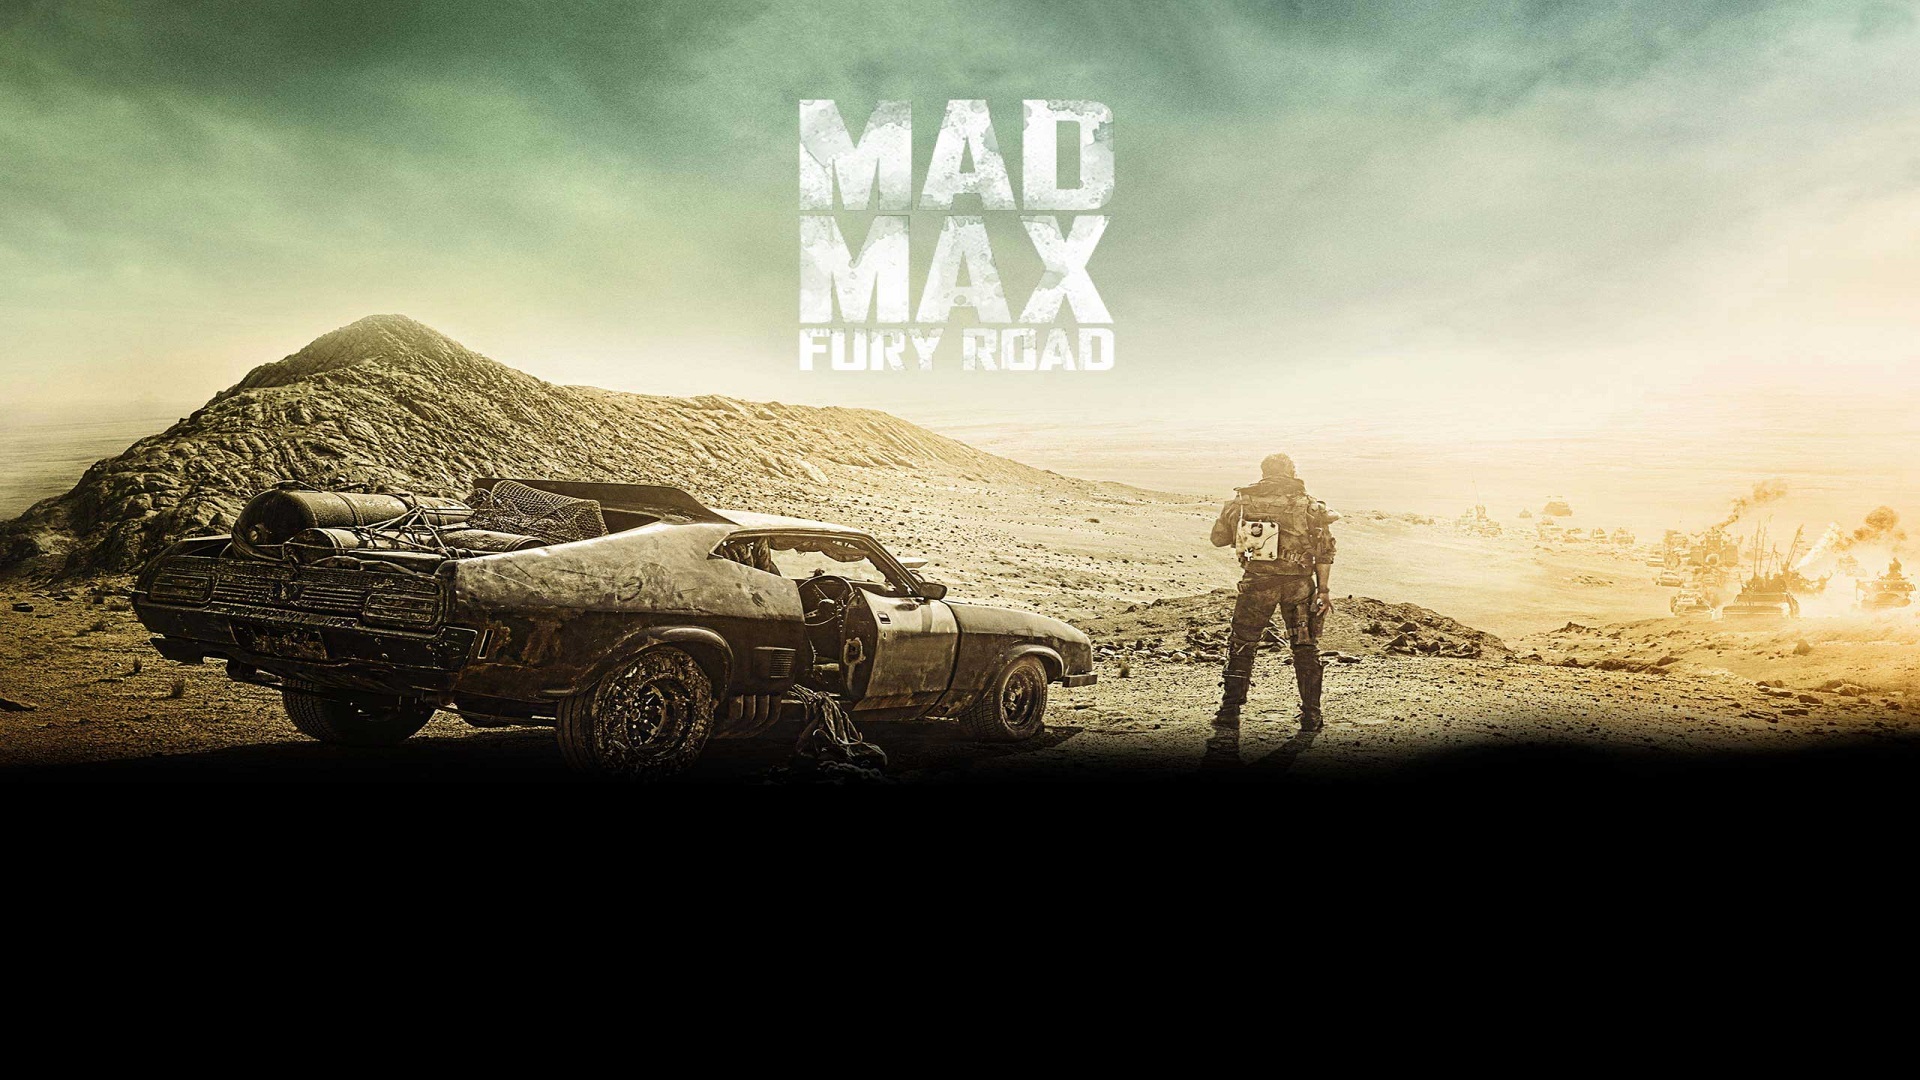  content Mad Max   Fury Road   2015 Movie Wallpaper 2 view original